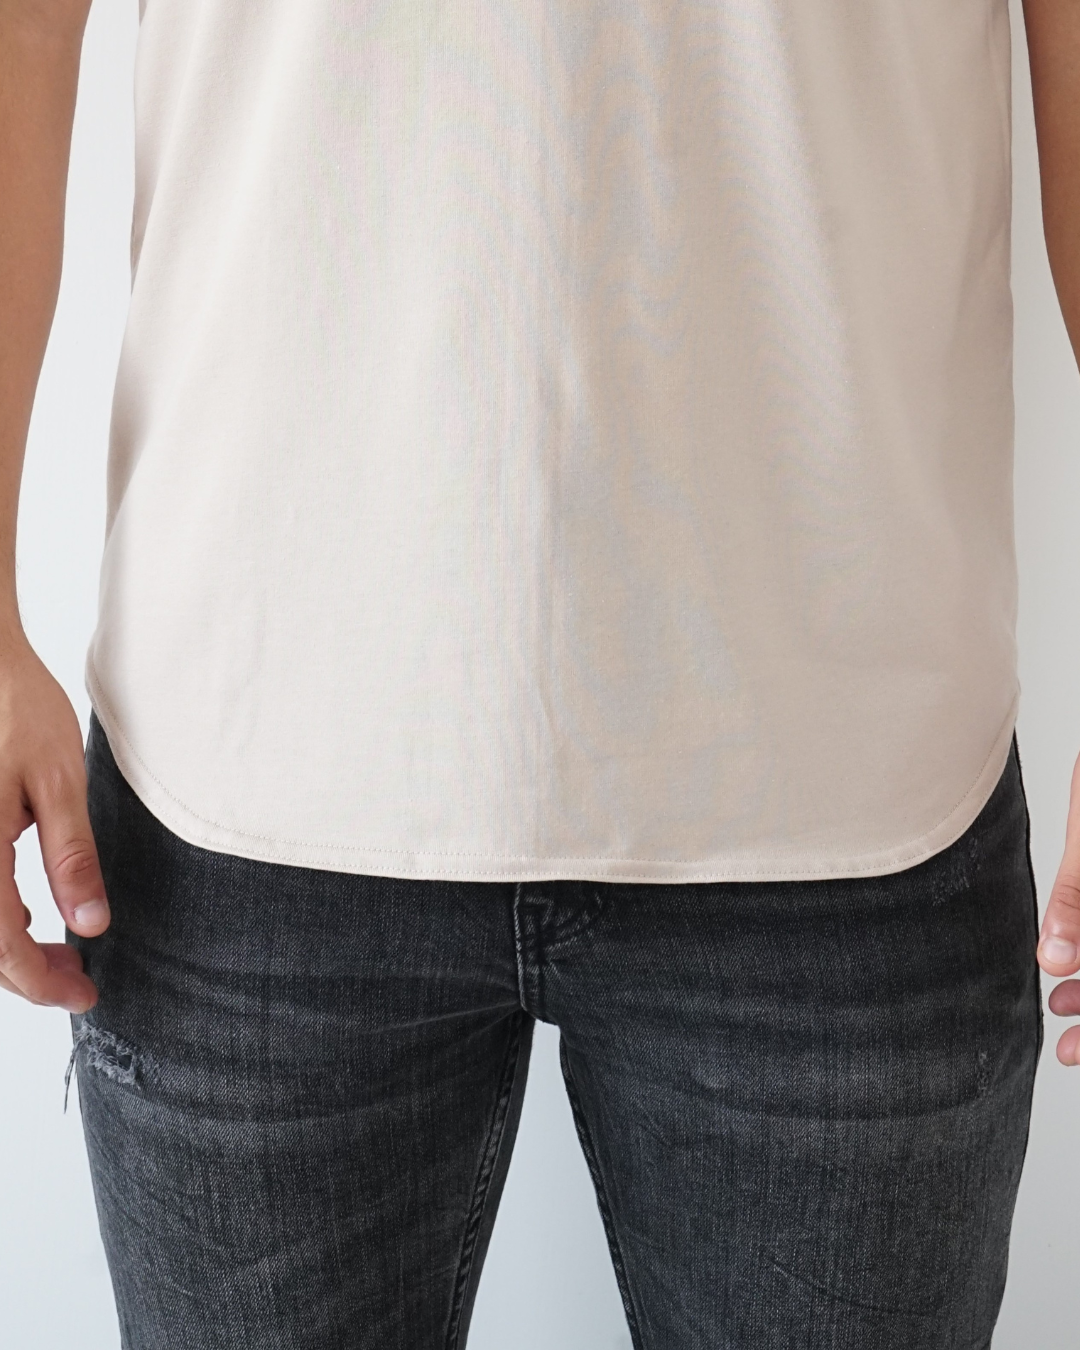 Sand T-shirt - Short Sleeve Crew Neck Original Bottom